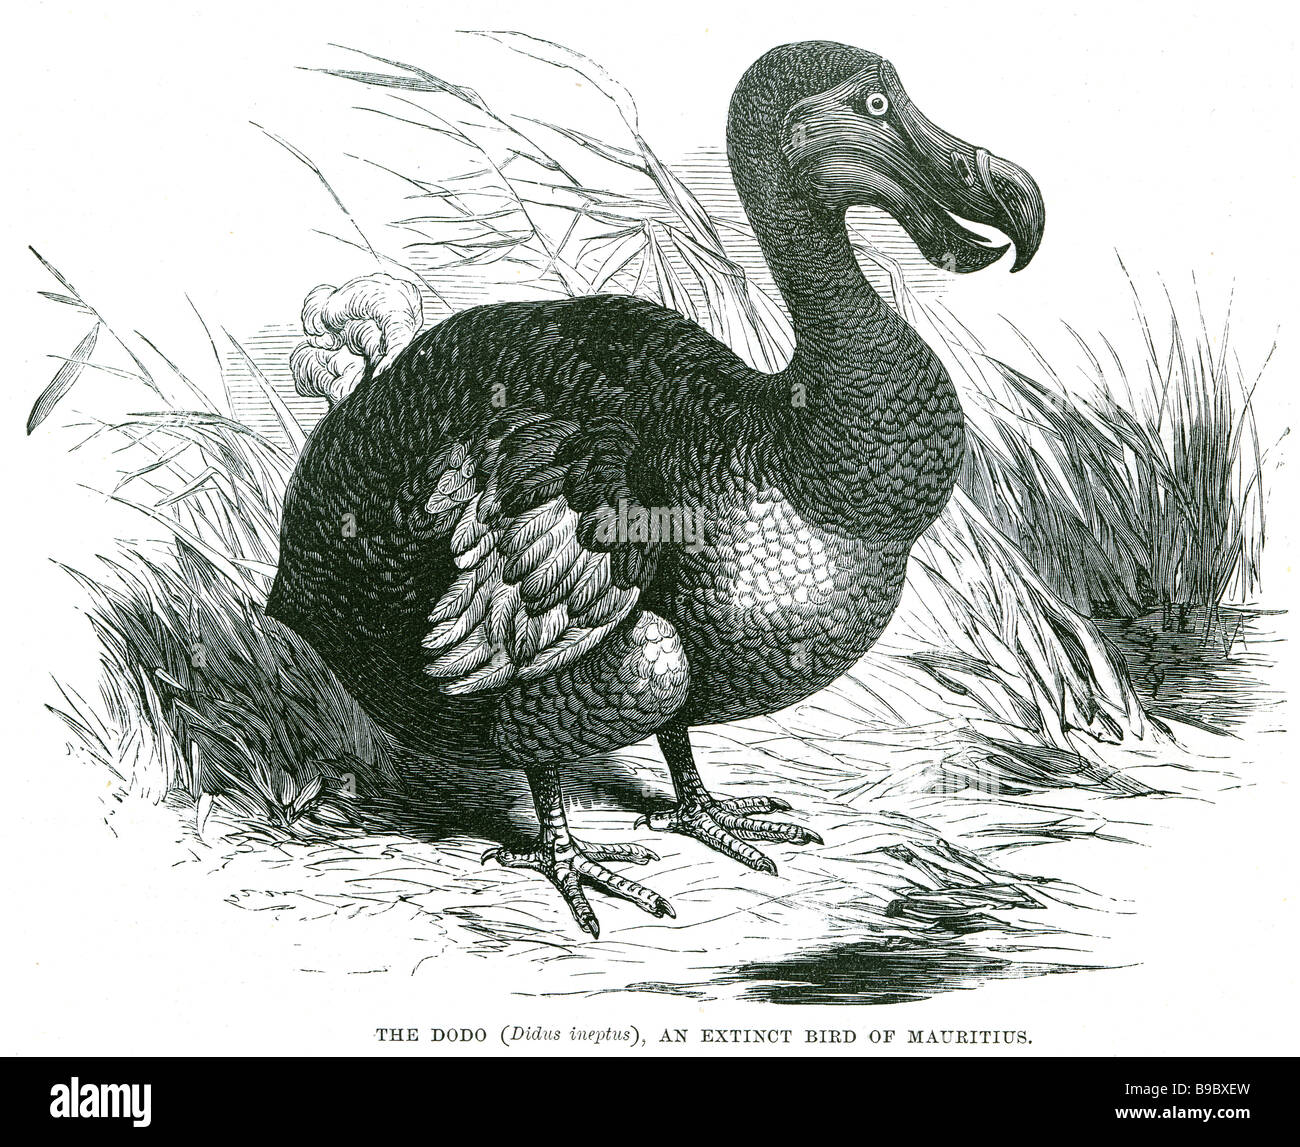 the dodo didus ineptus an extinct bird of mauritius The dodo (Raphus cucullatus) was a flightless bird endemic to the Indian Oce Stock Photo